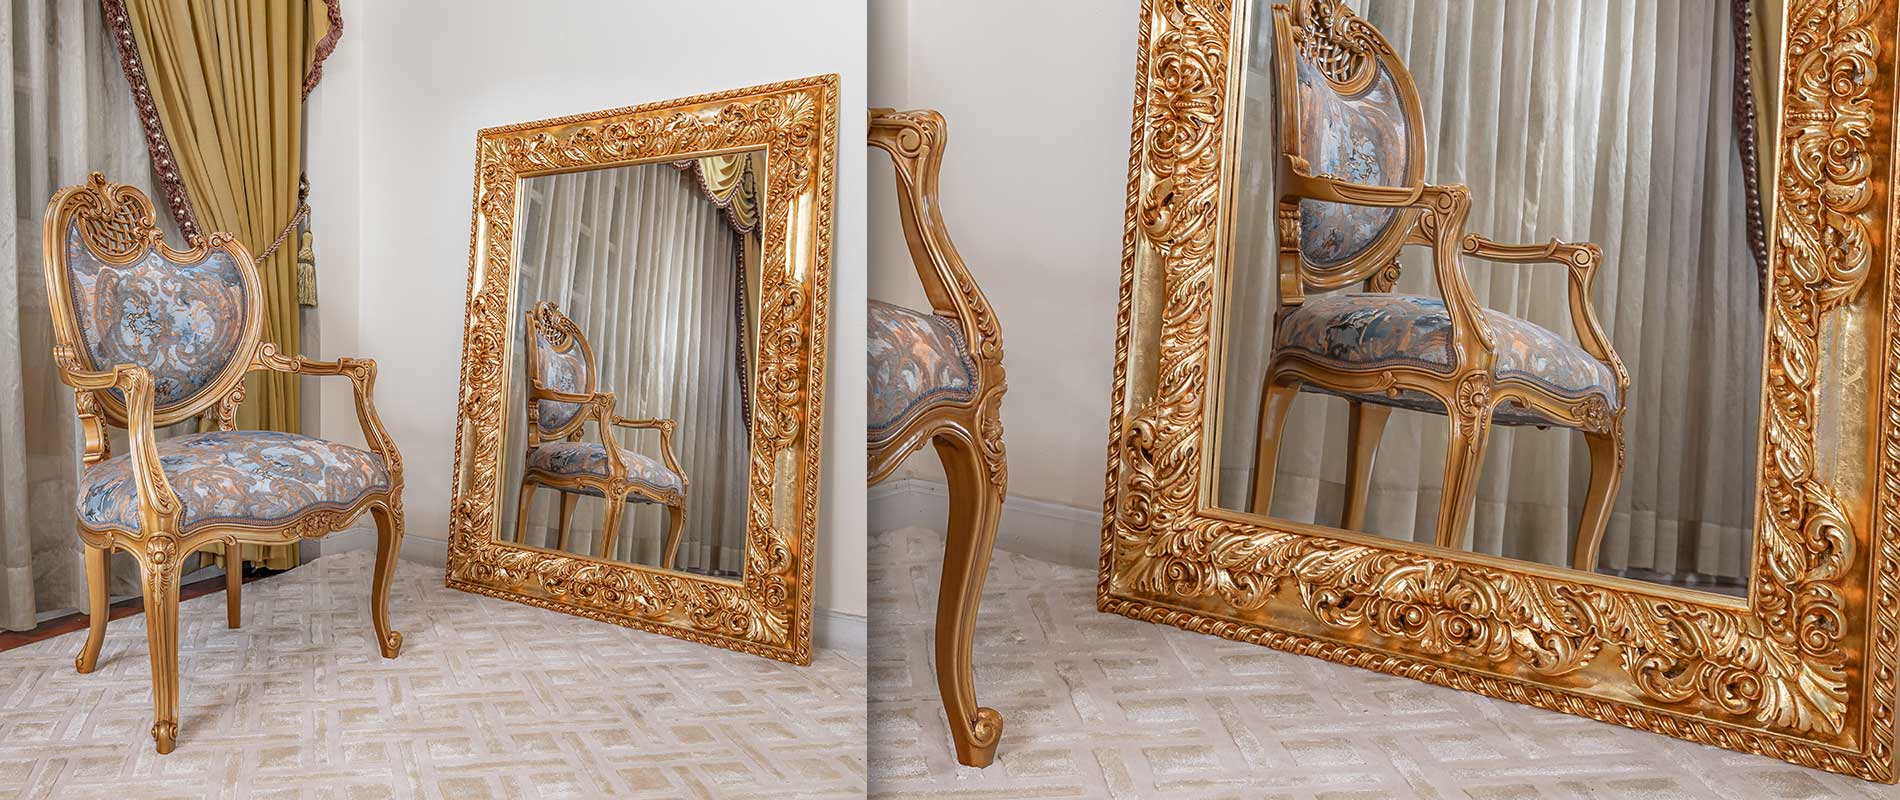 classic italian mirror